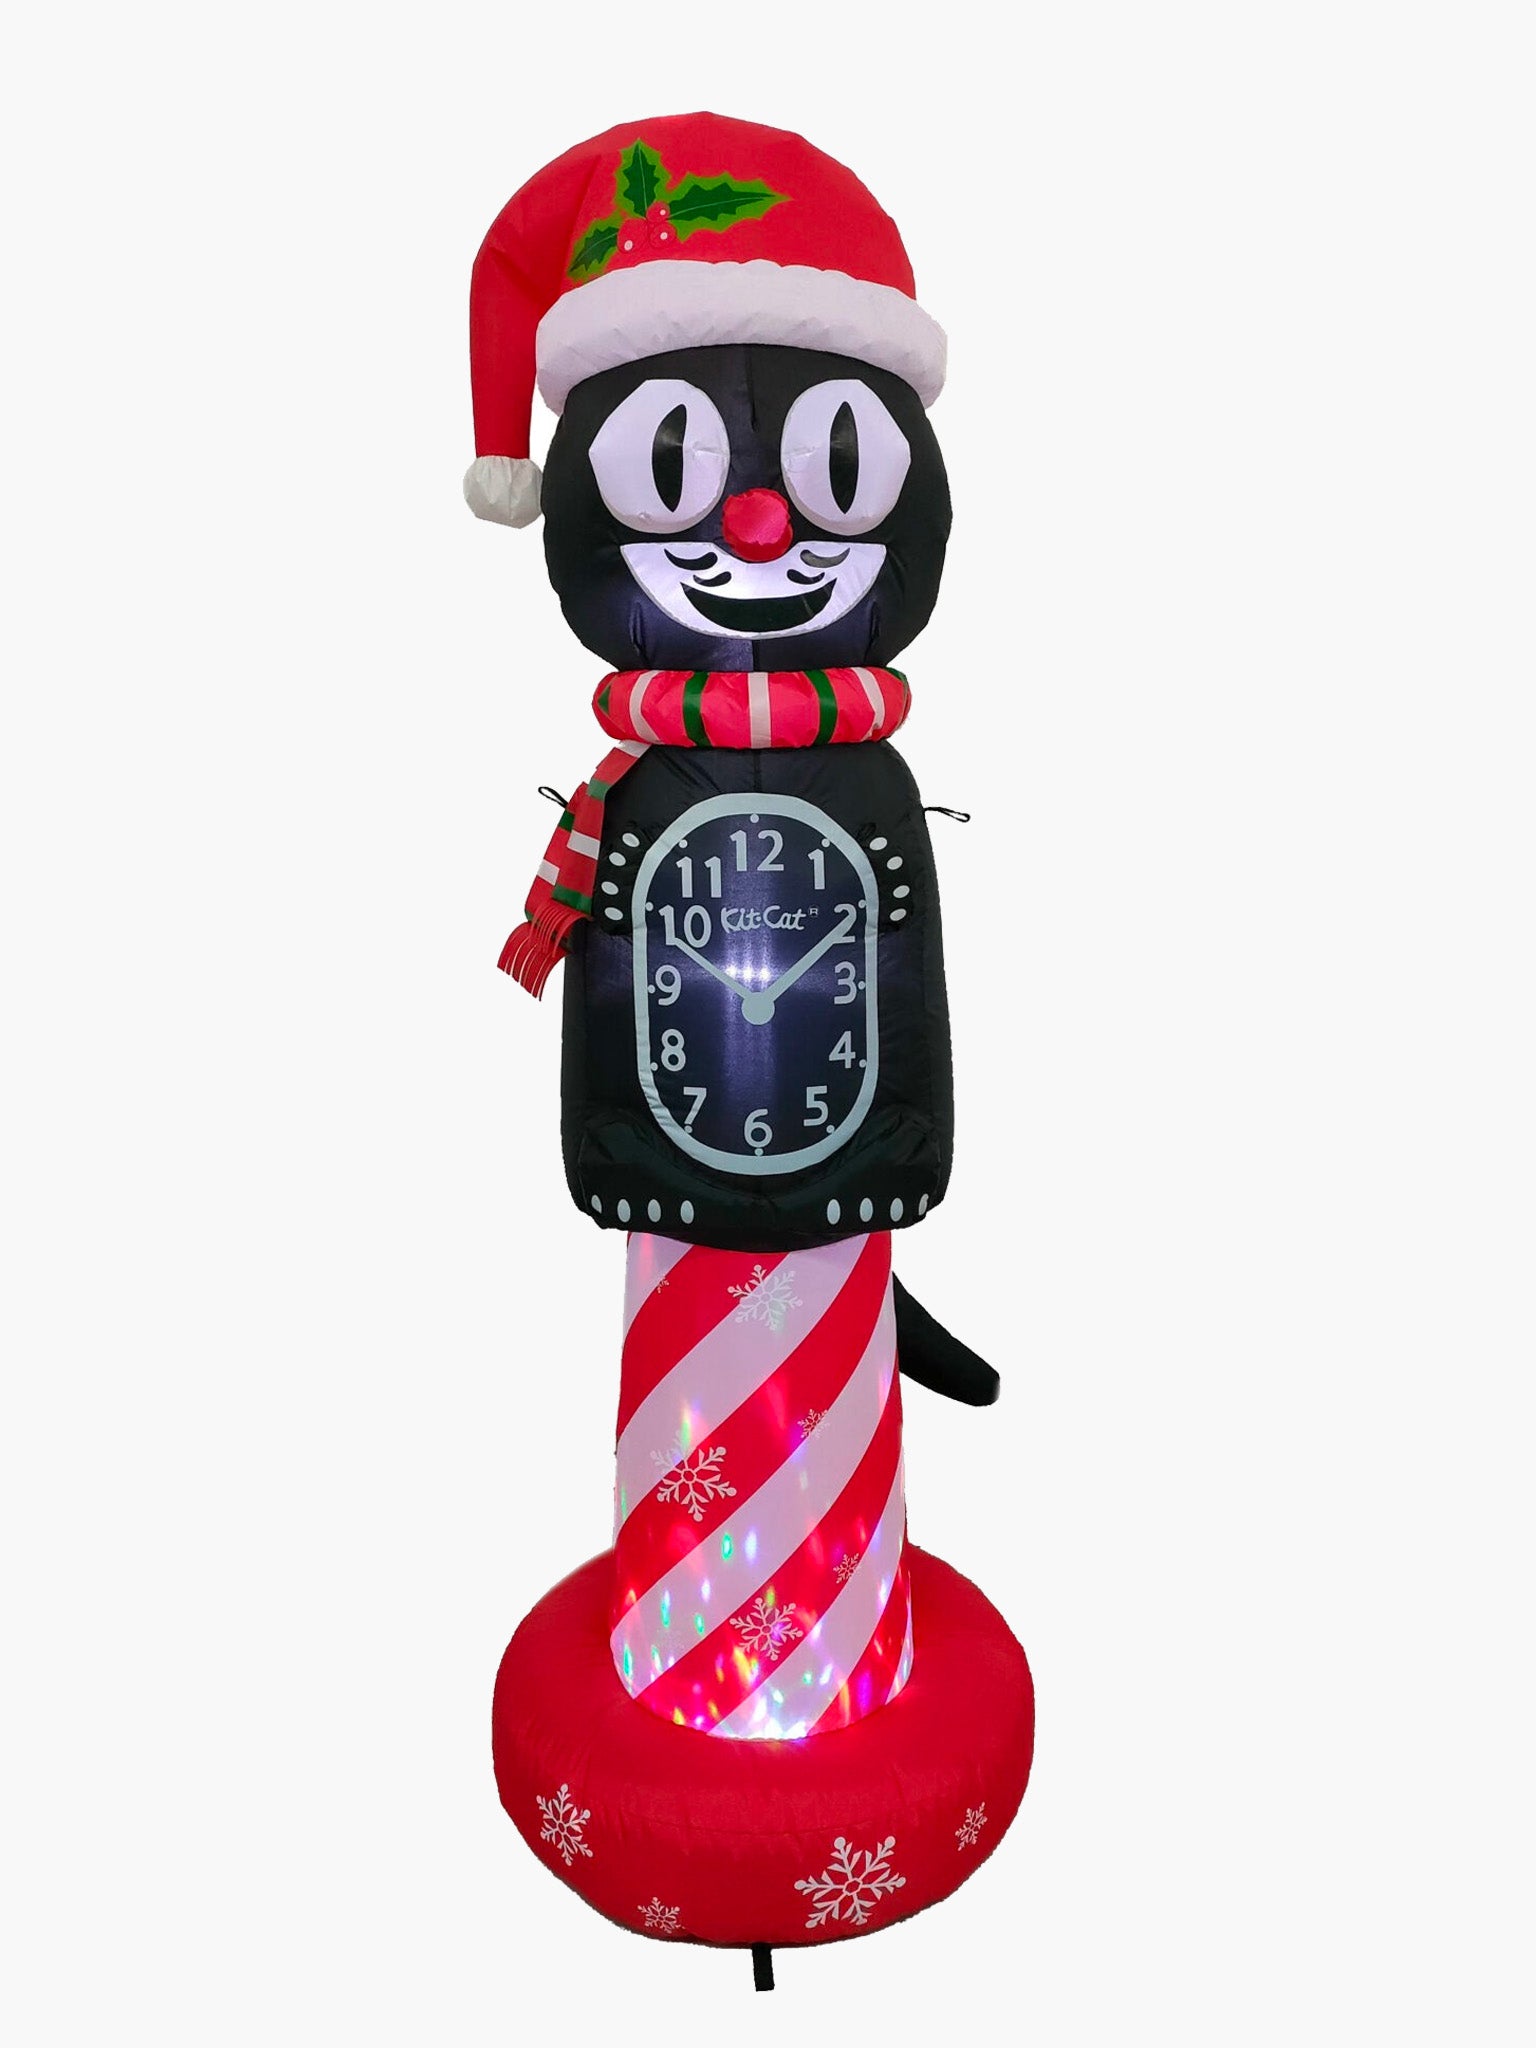 Kit Cat Klock - 6-Foot Inflatable Christmas Decoration